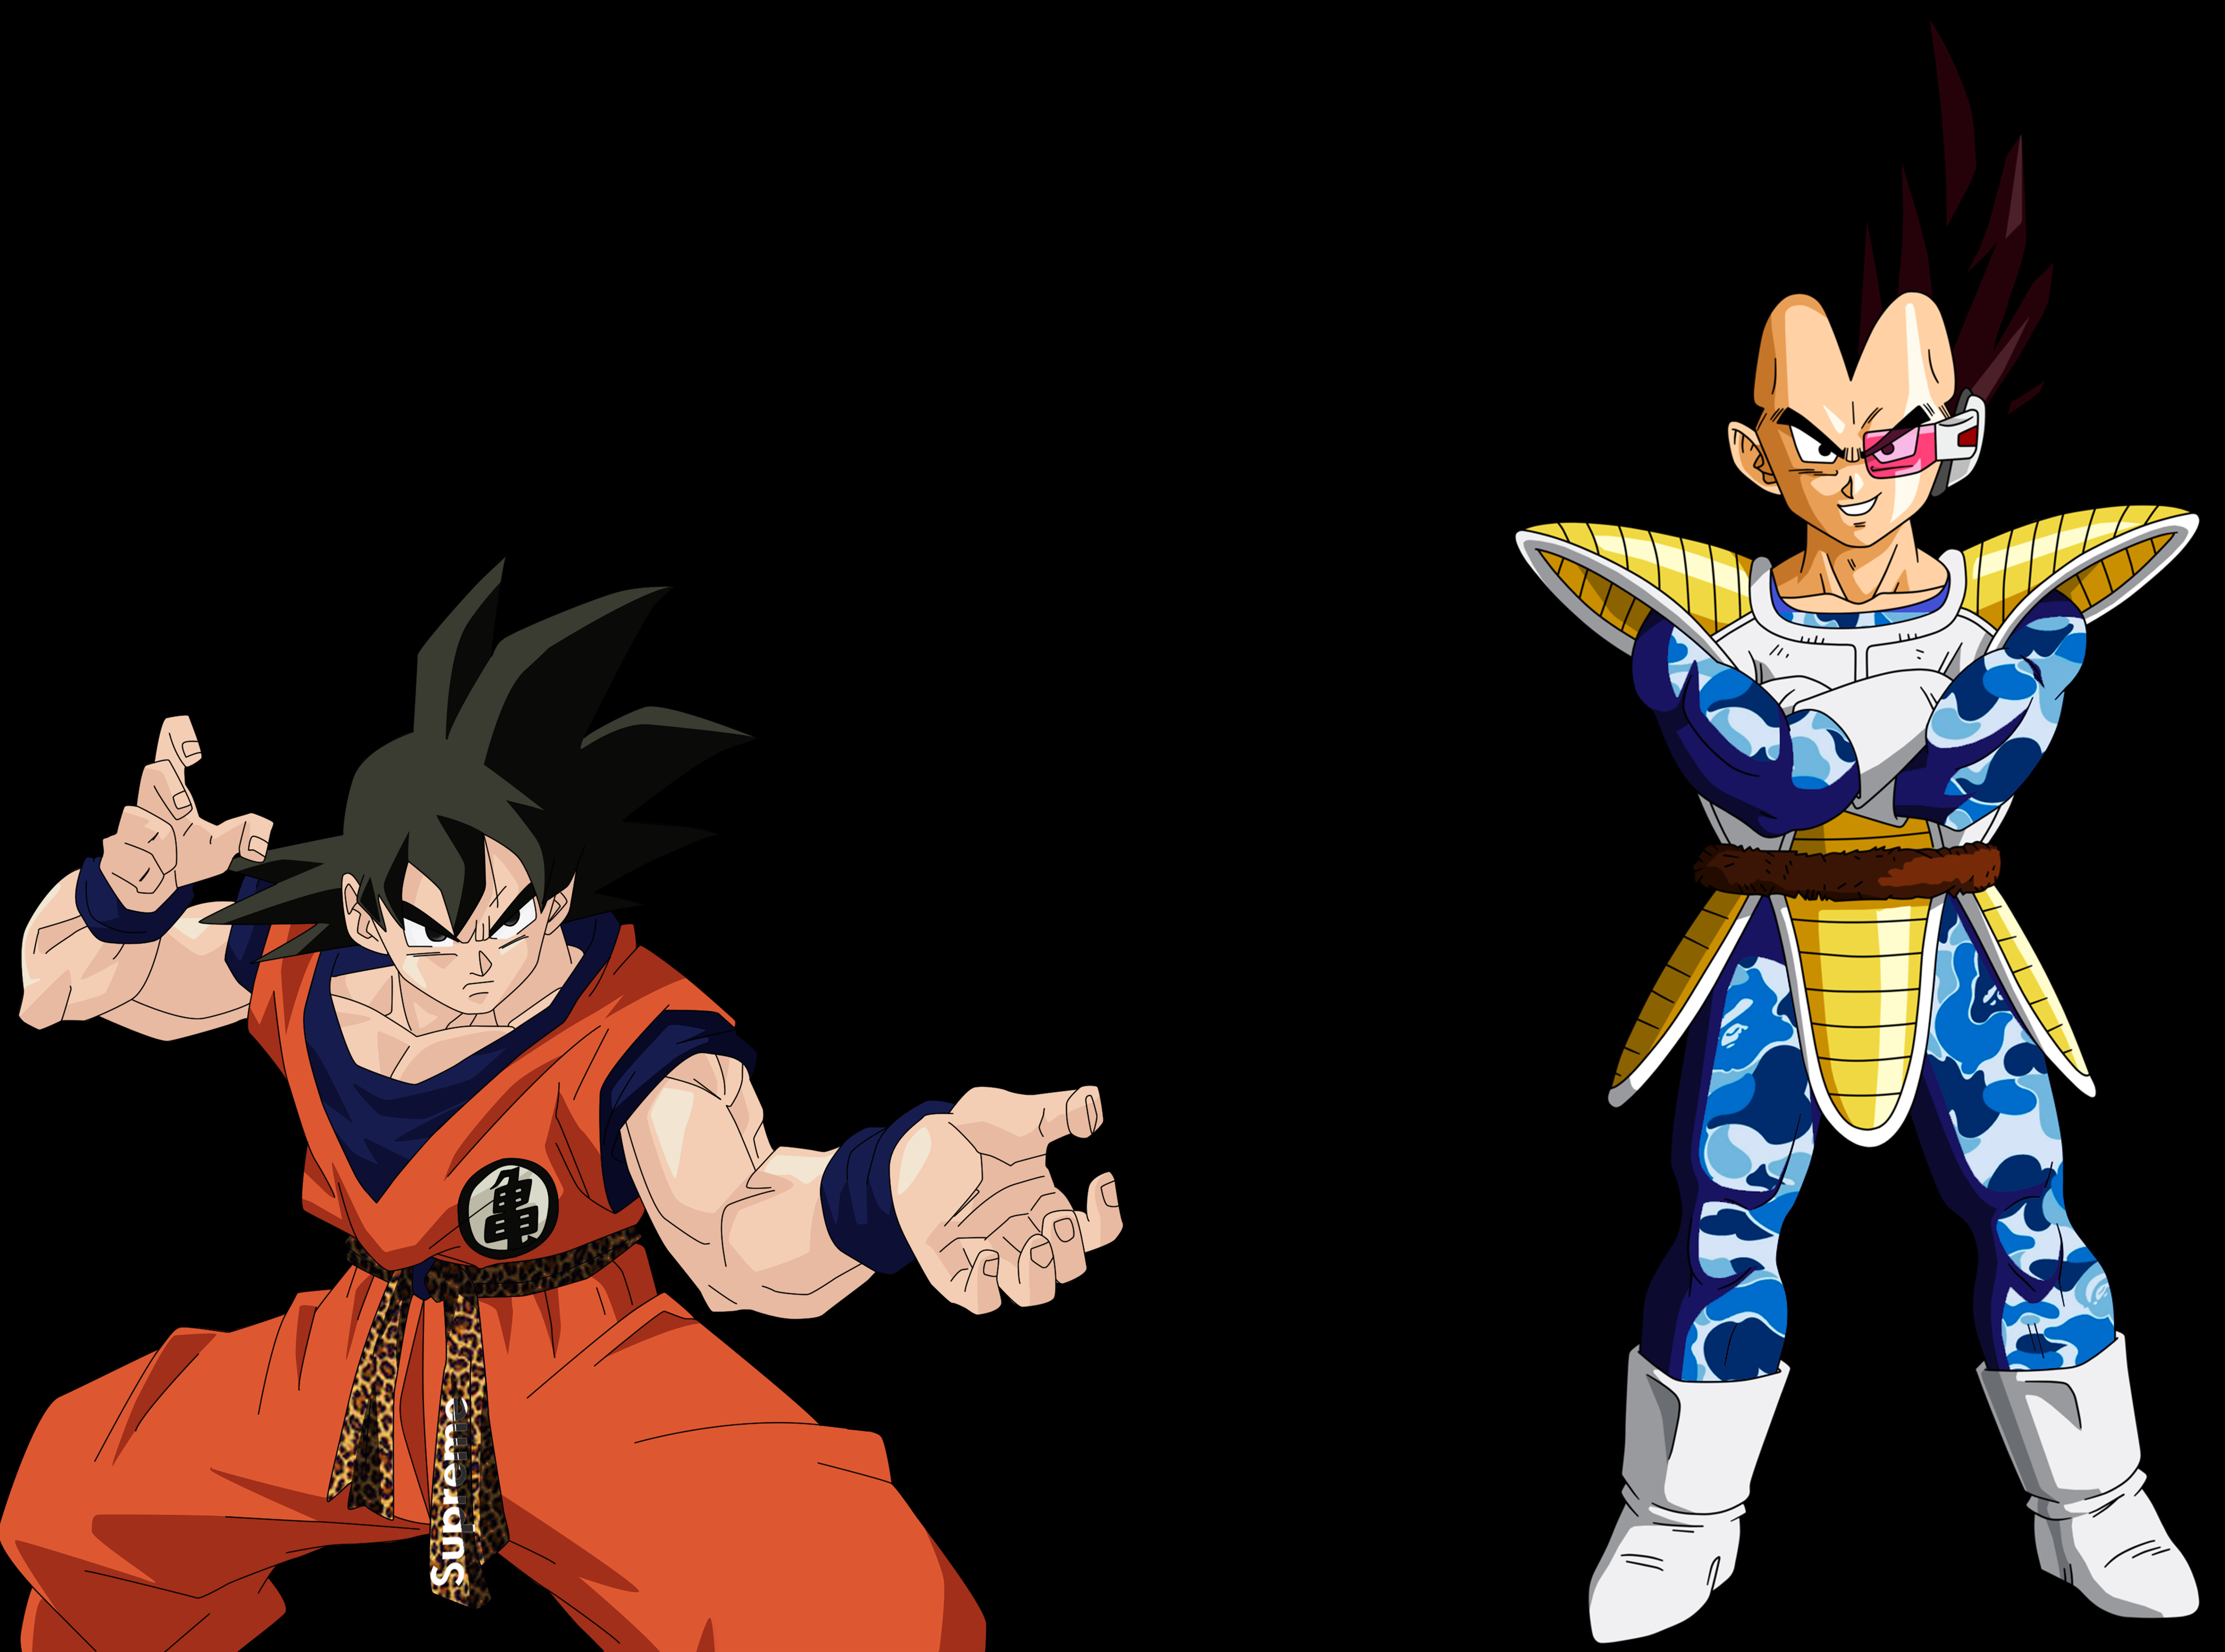 Desktop background of Goku and Vegeta inspired